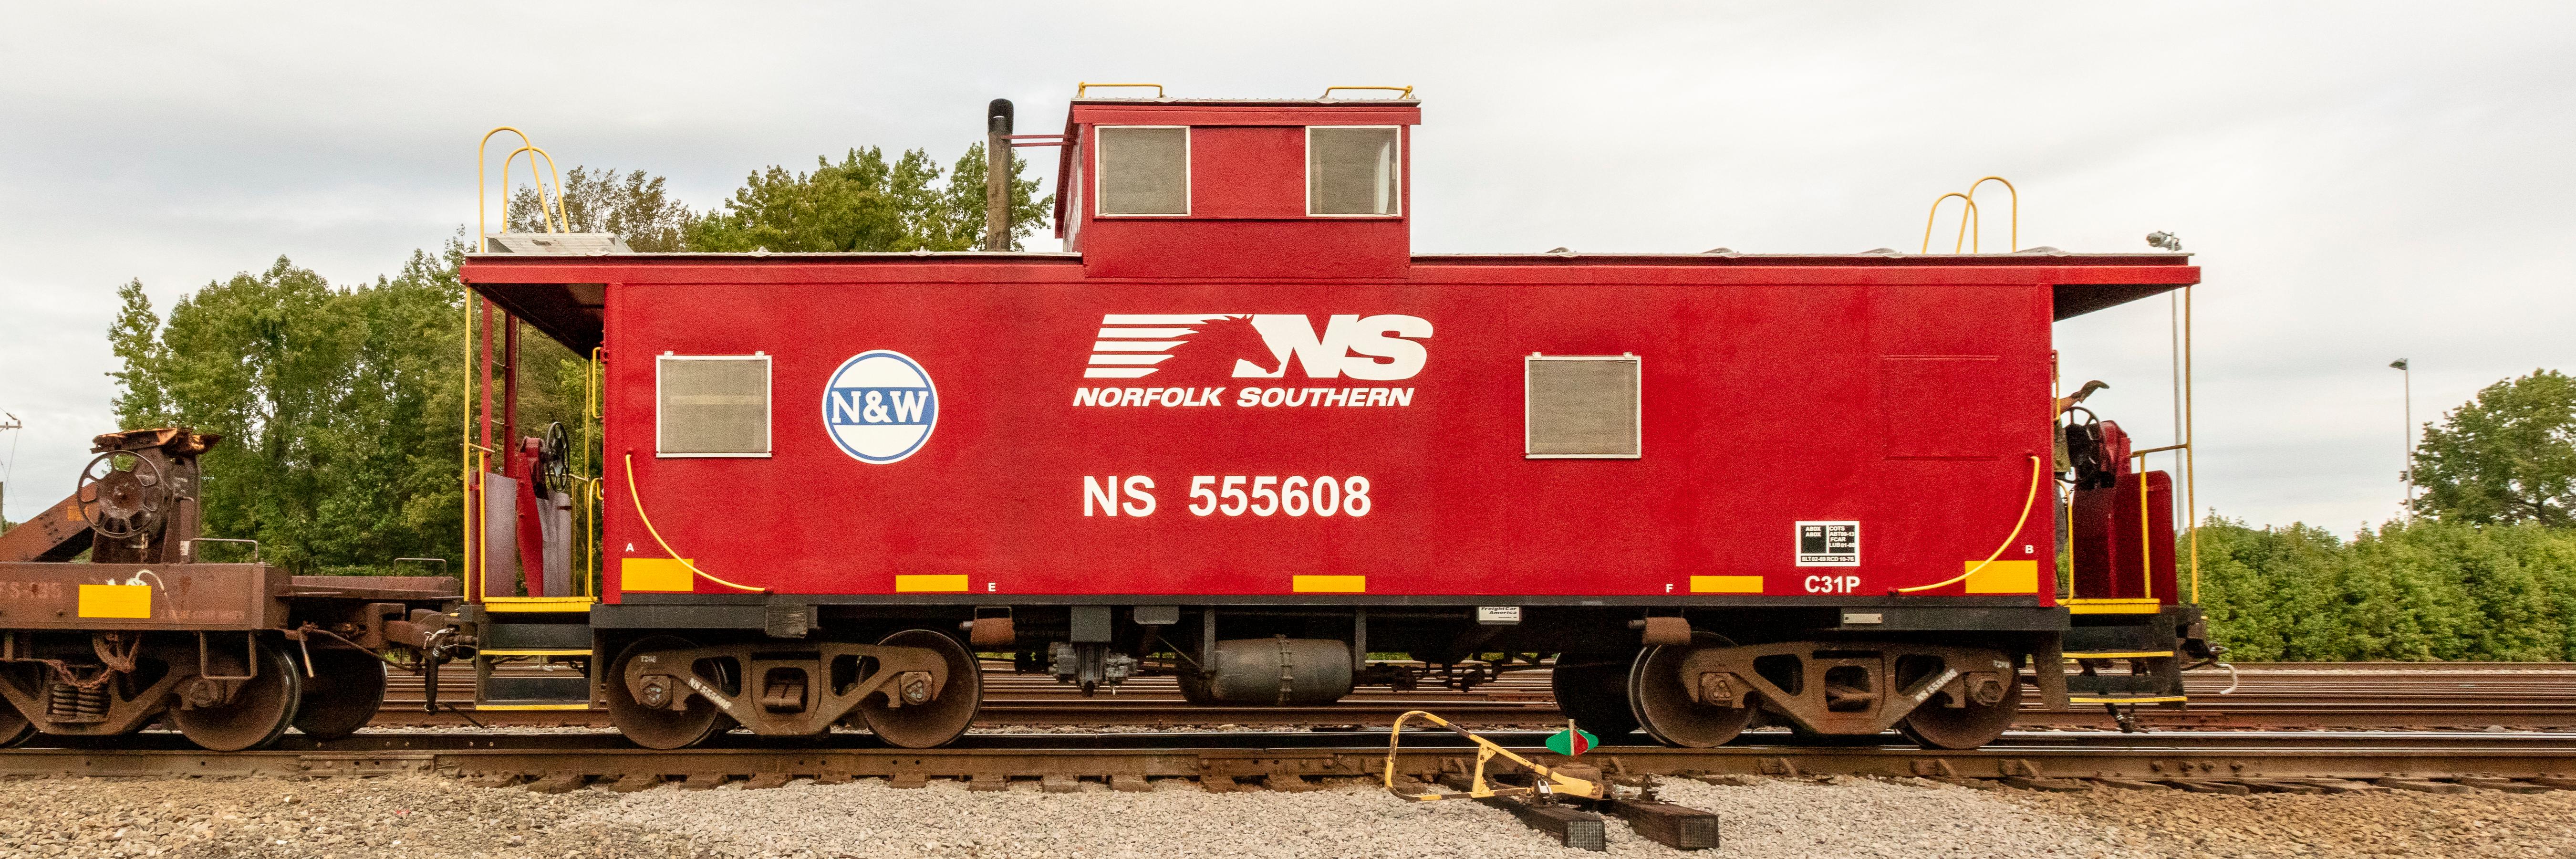 Stephen Mallon Color Photograph - Contemporary color photograph "NS 555608 Caboose" (freight train series)